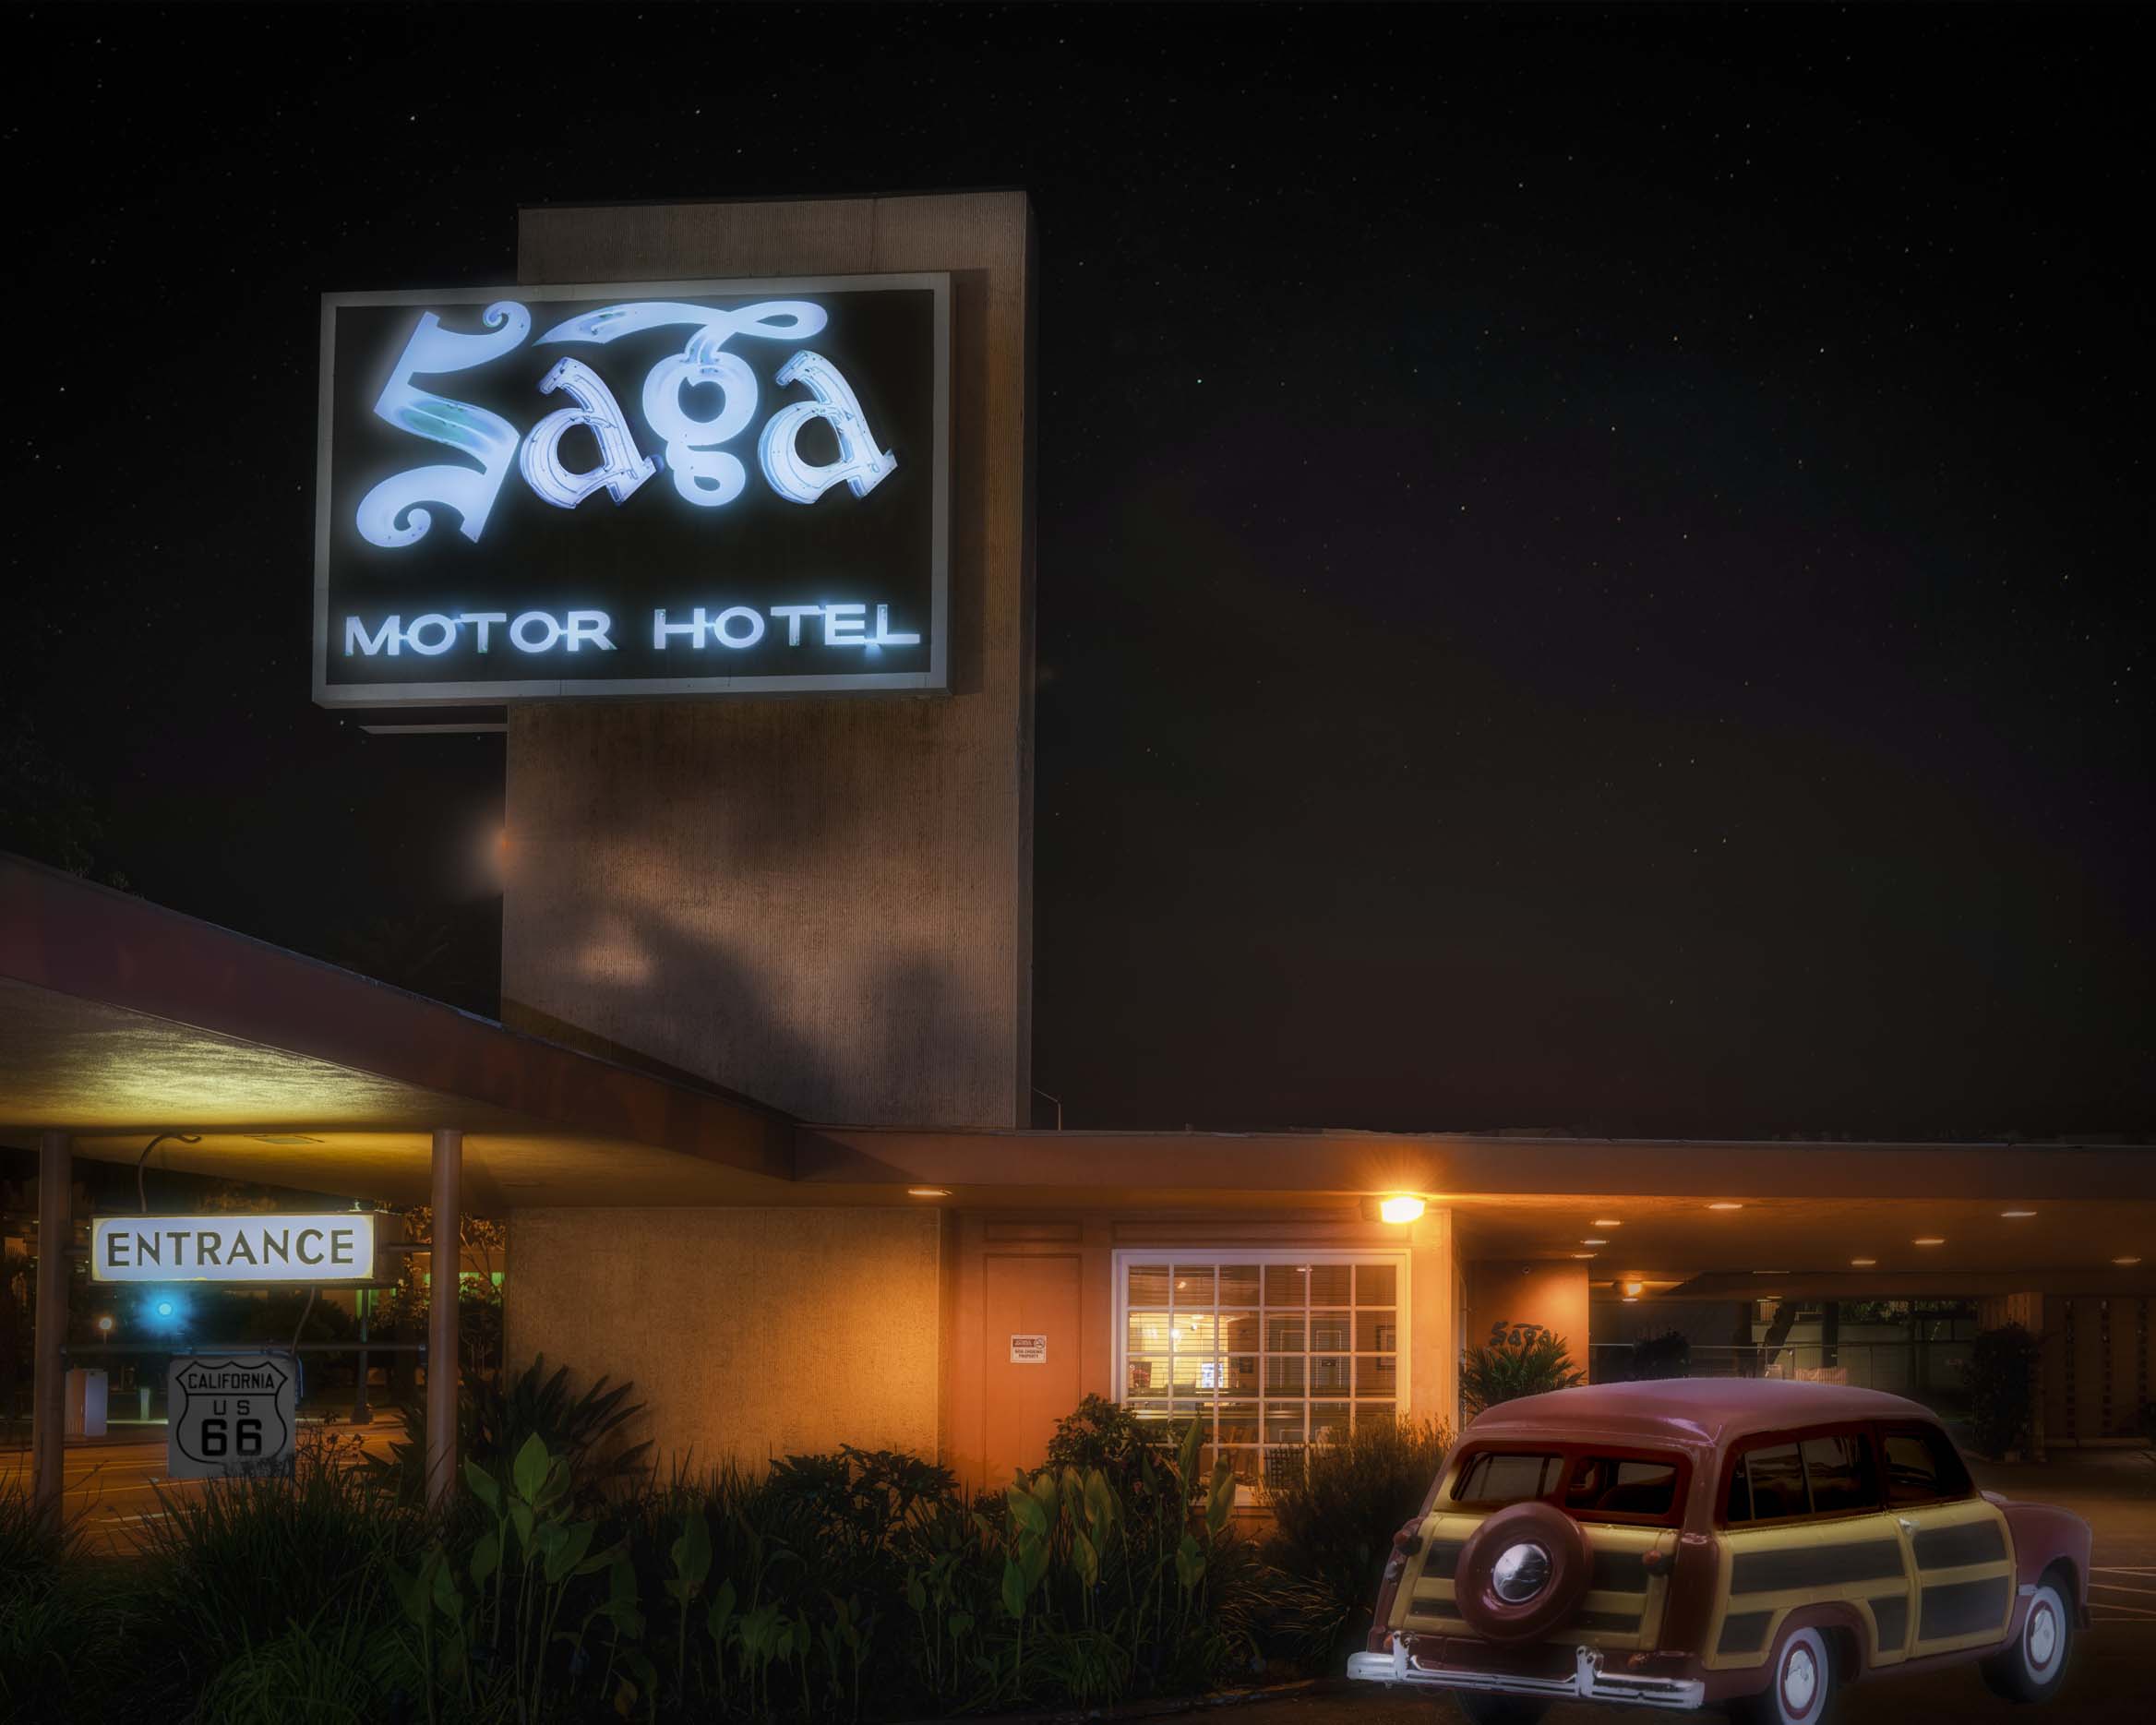 04x05_saga-motor-hotel_landscape.jpg